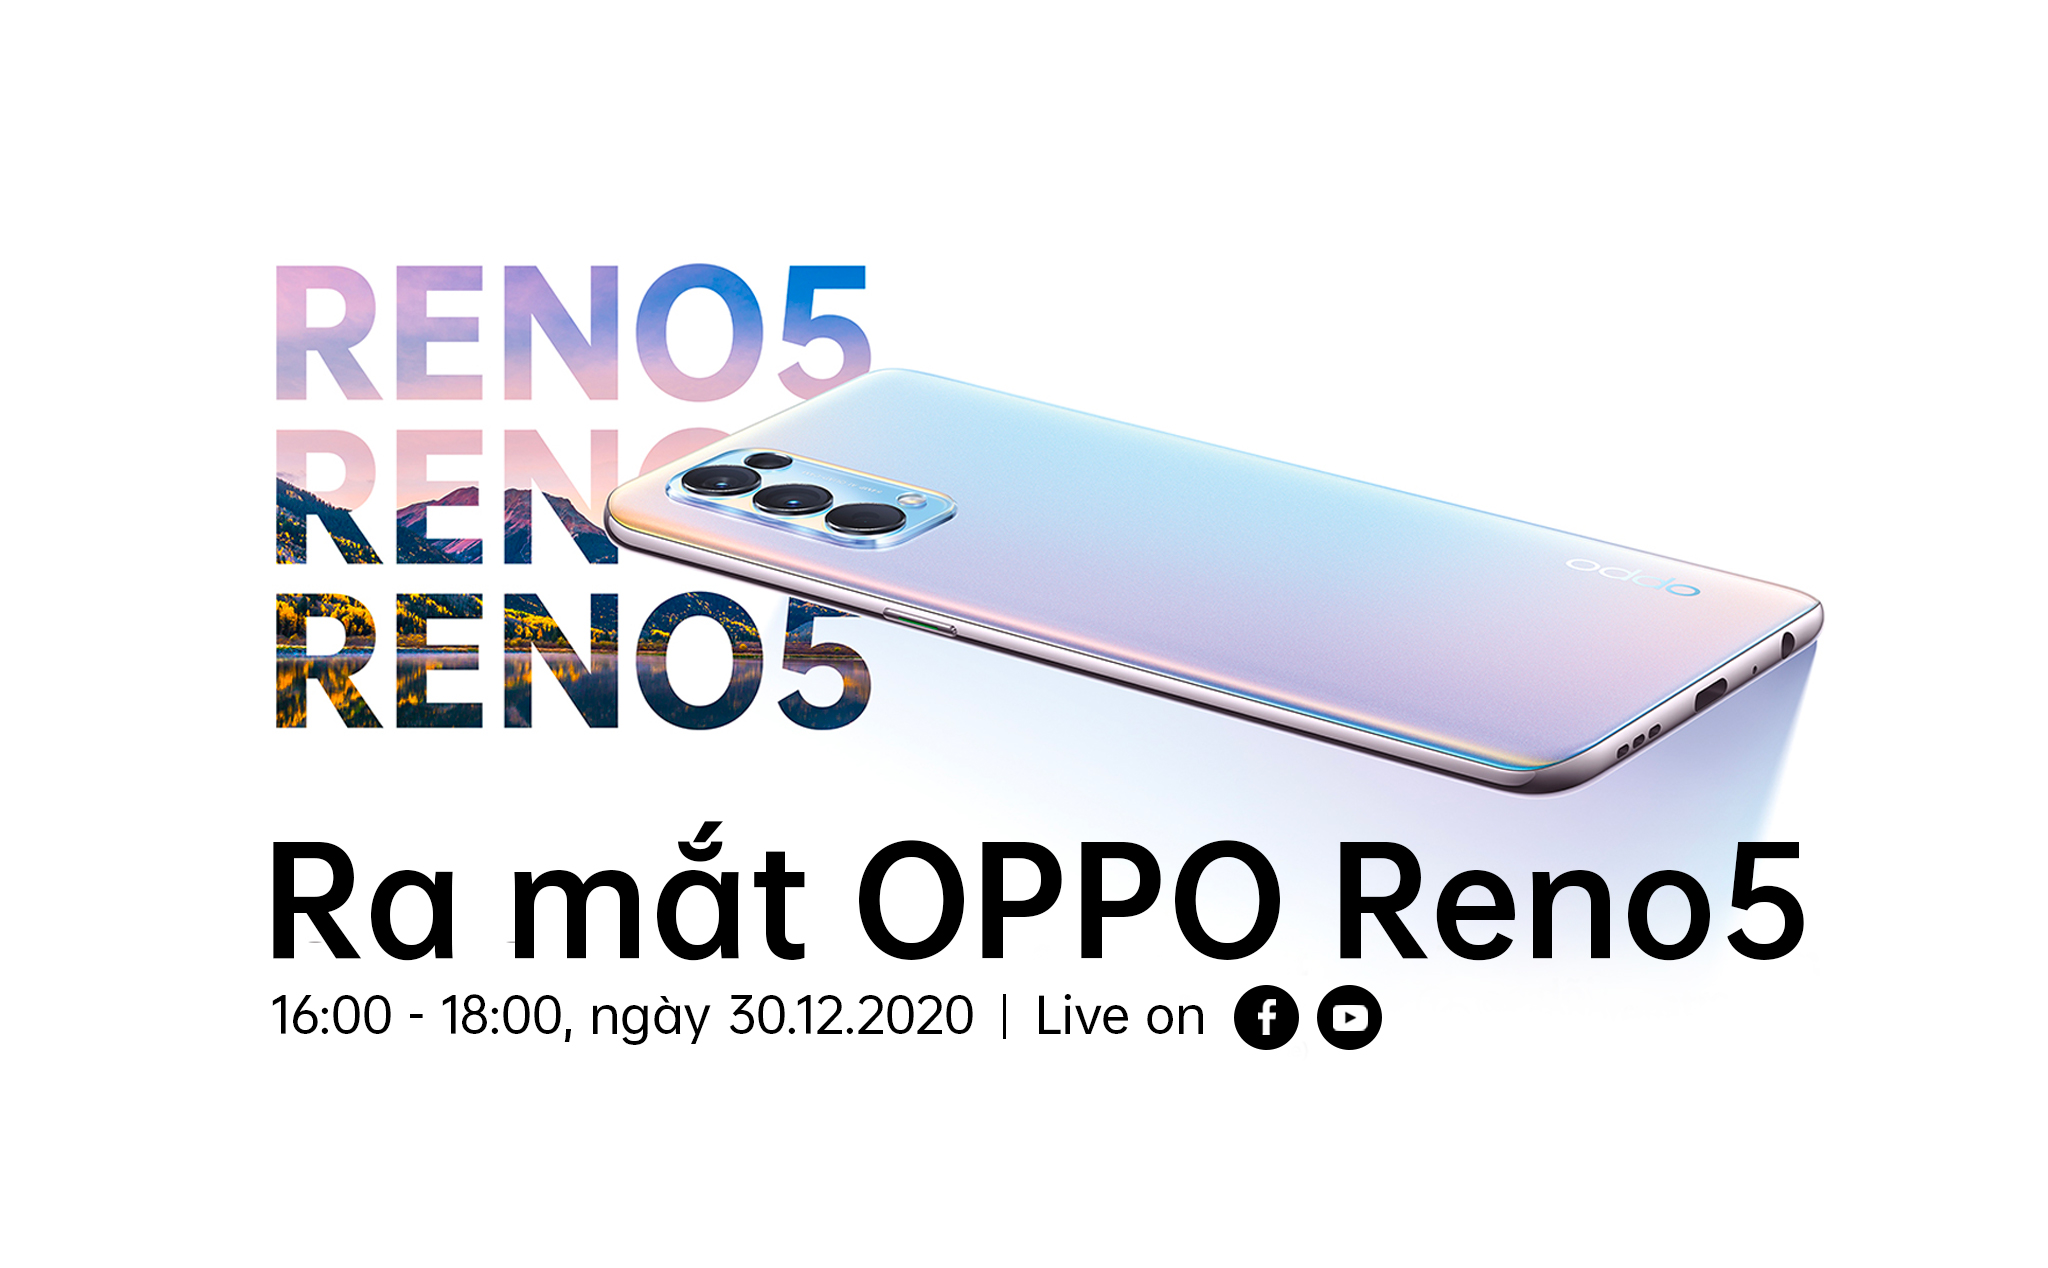 Cùng xem livestream ra mắt Oppo Reno5